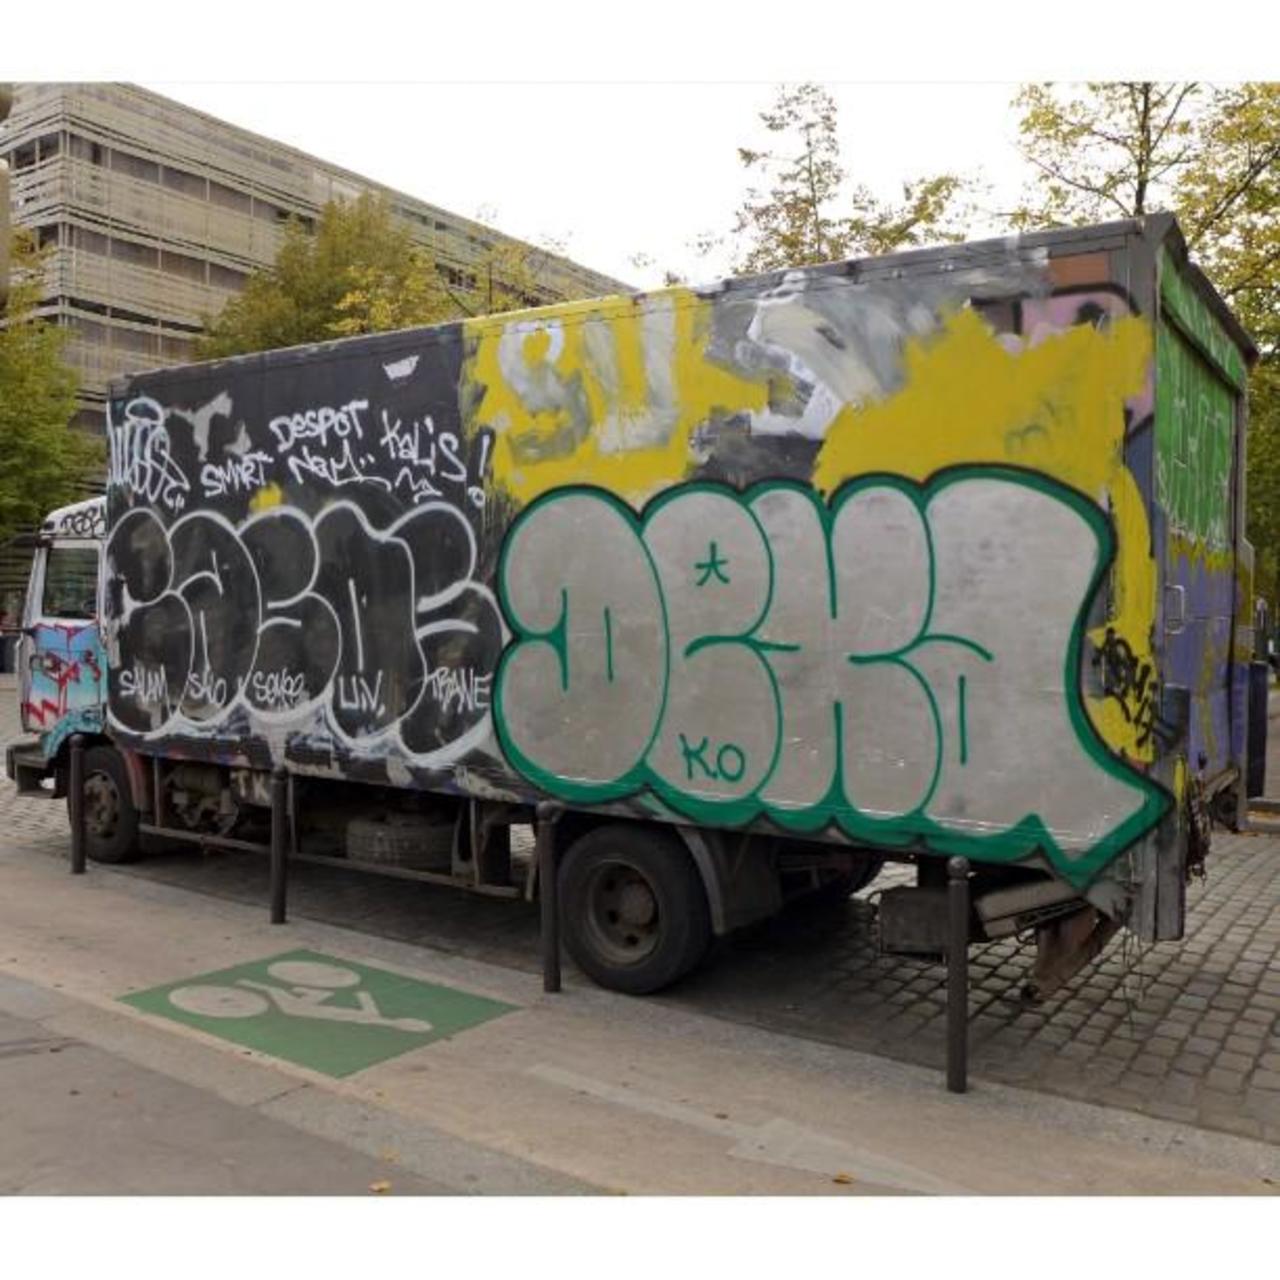 circumjacent_fr: #Paris #graffiti photo by maxdimontemarciano http://ift.tt/1M4BBhE #StreetArt http://t.co/wn2bbeAAdI